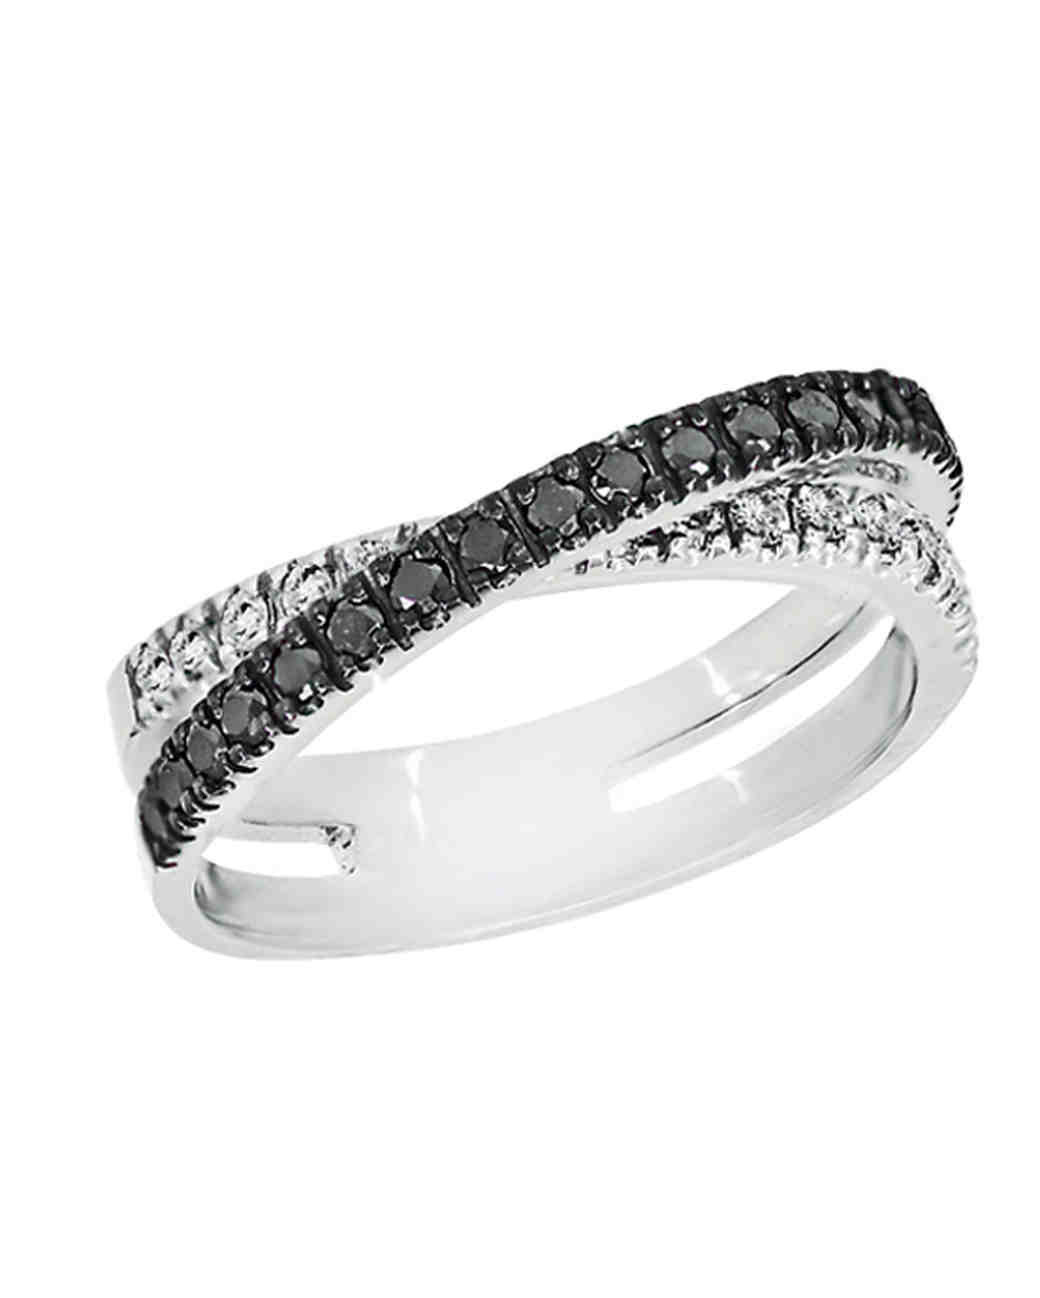 Engagement Rings Black Diamonds
 The New LBD The Little Black Diamond Engagement Ring